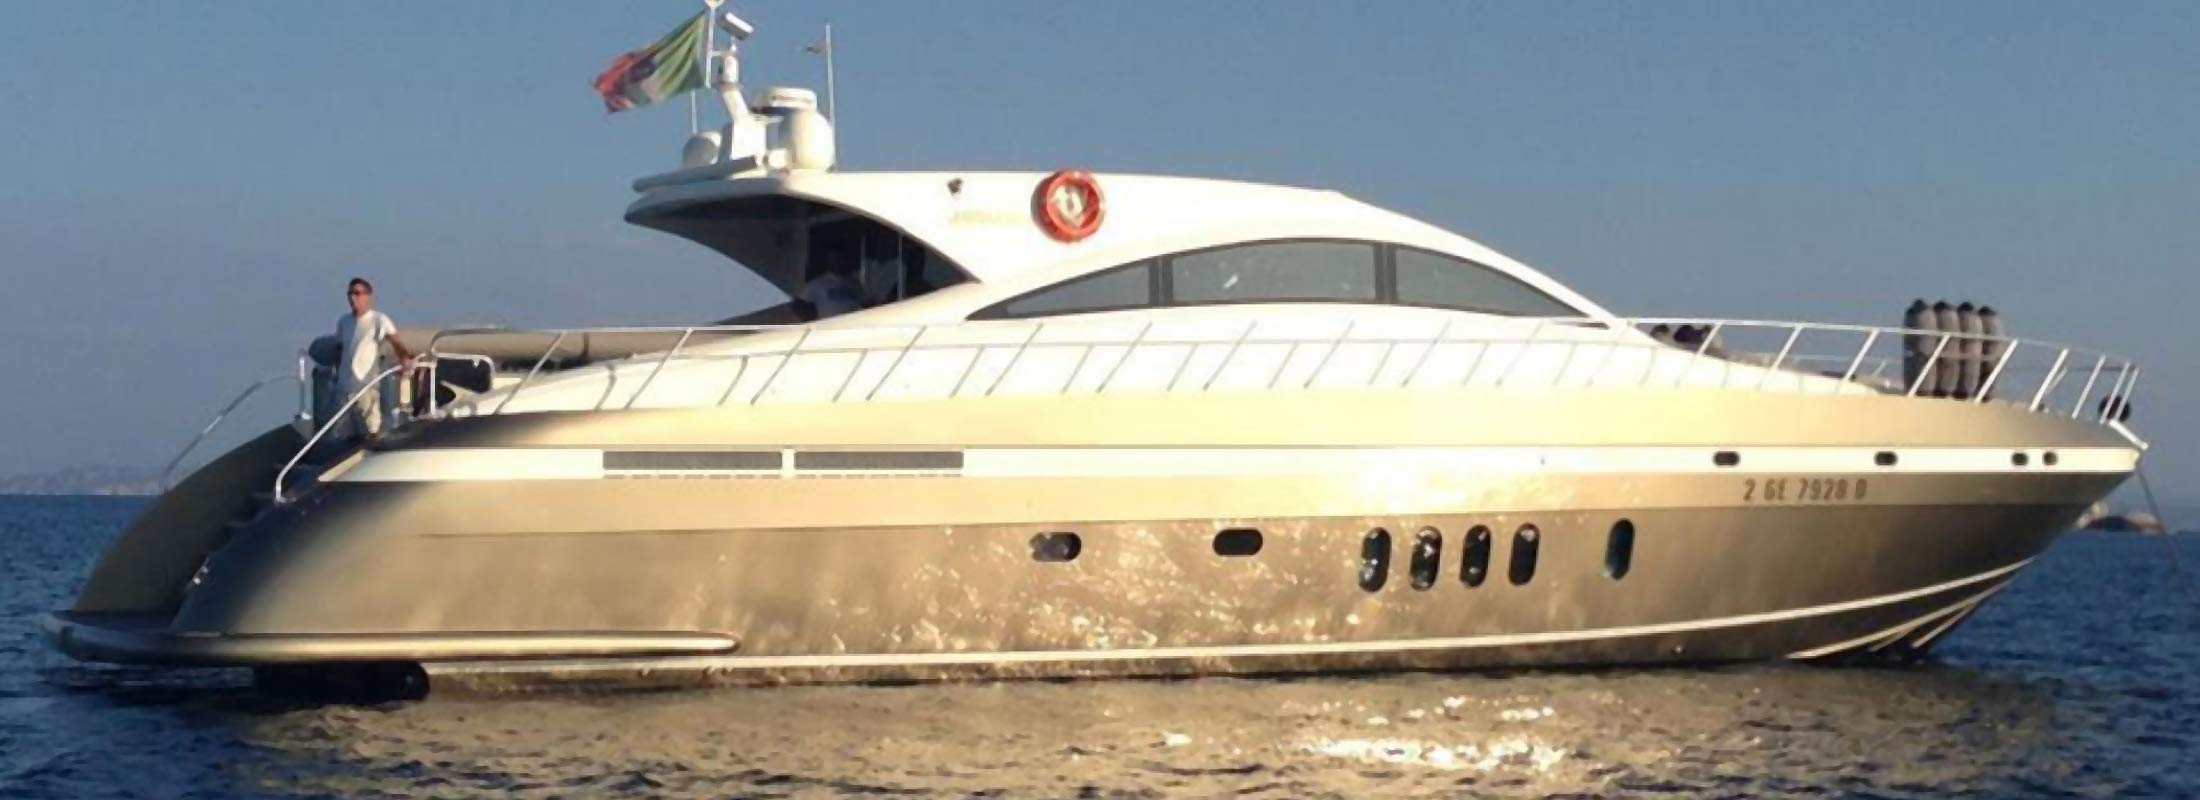 Yachtmind Motor Yacht for Charter Mediterranean slider 1